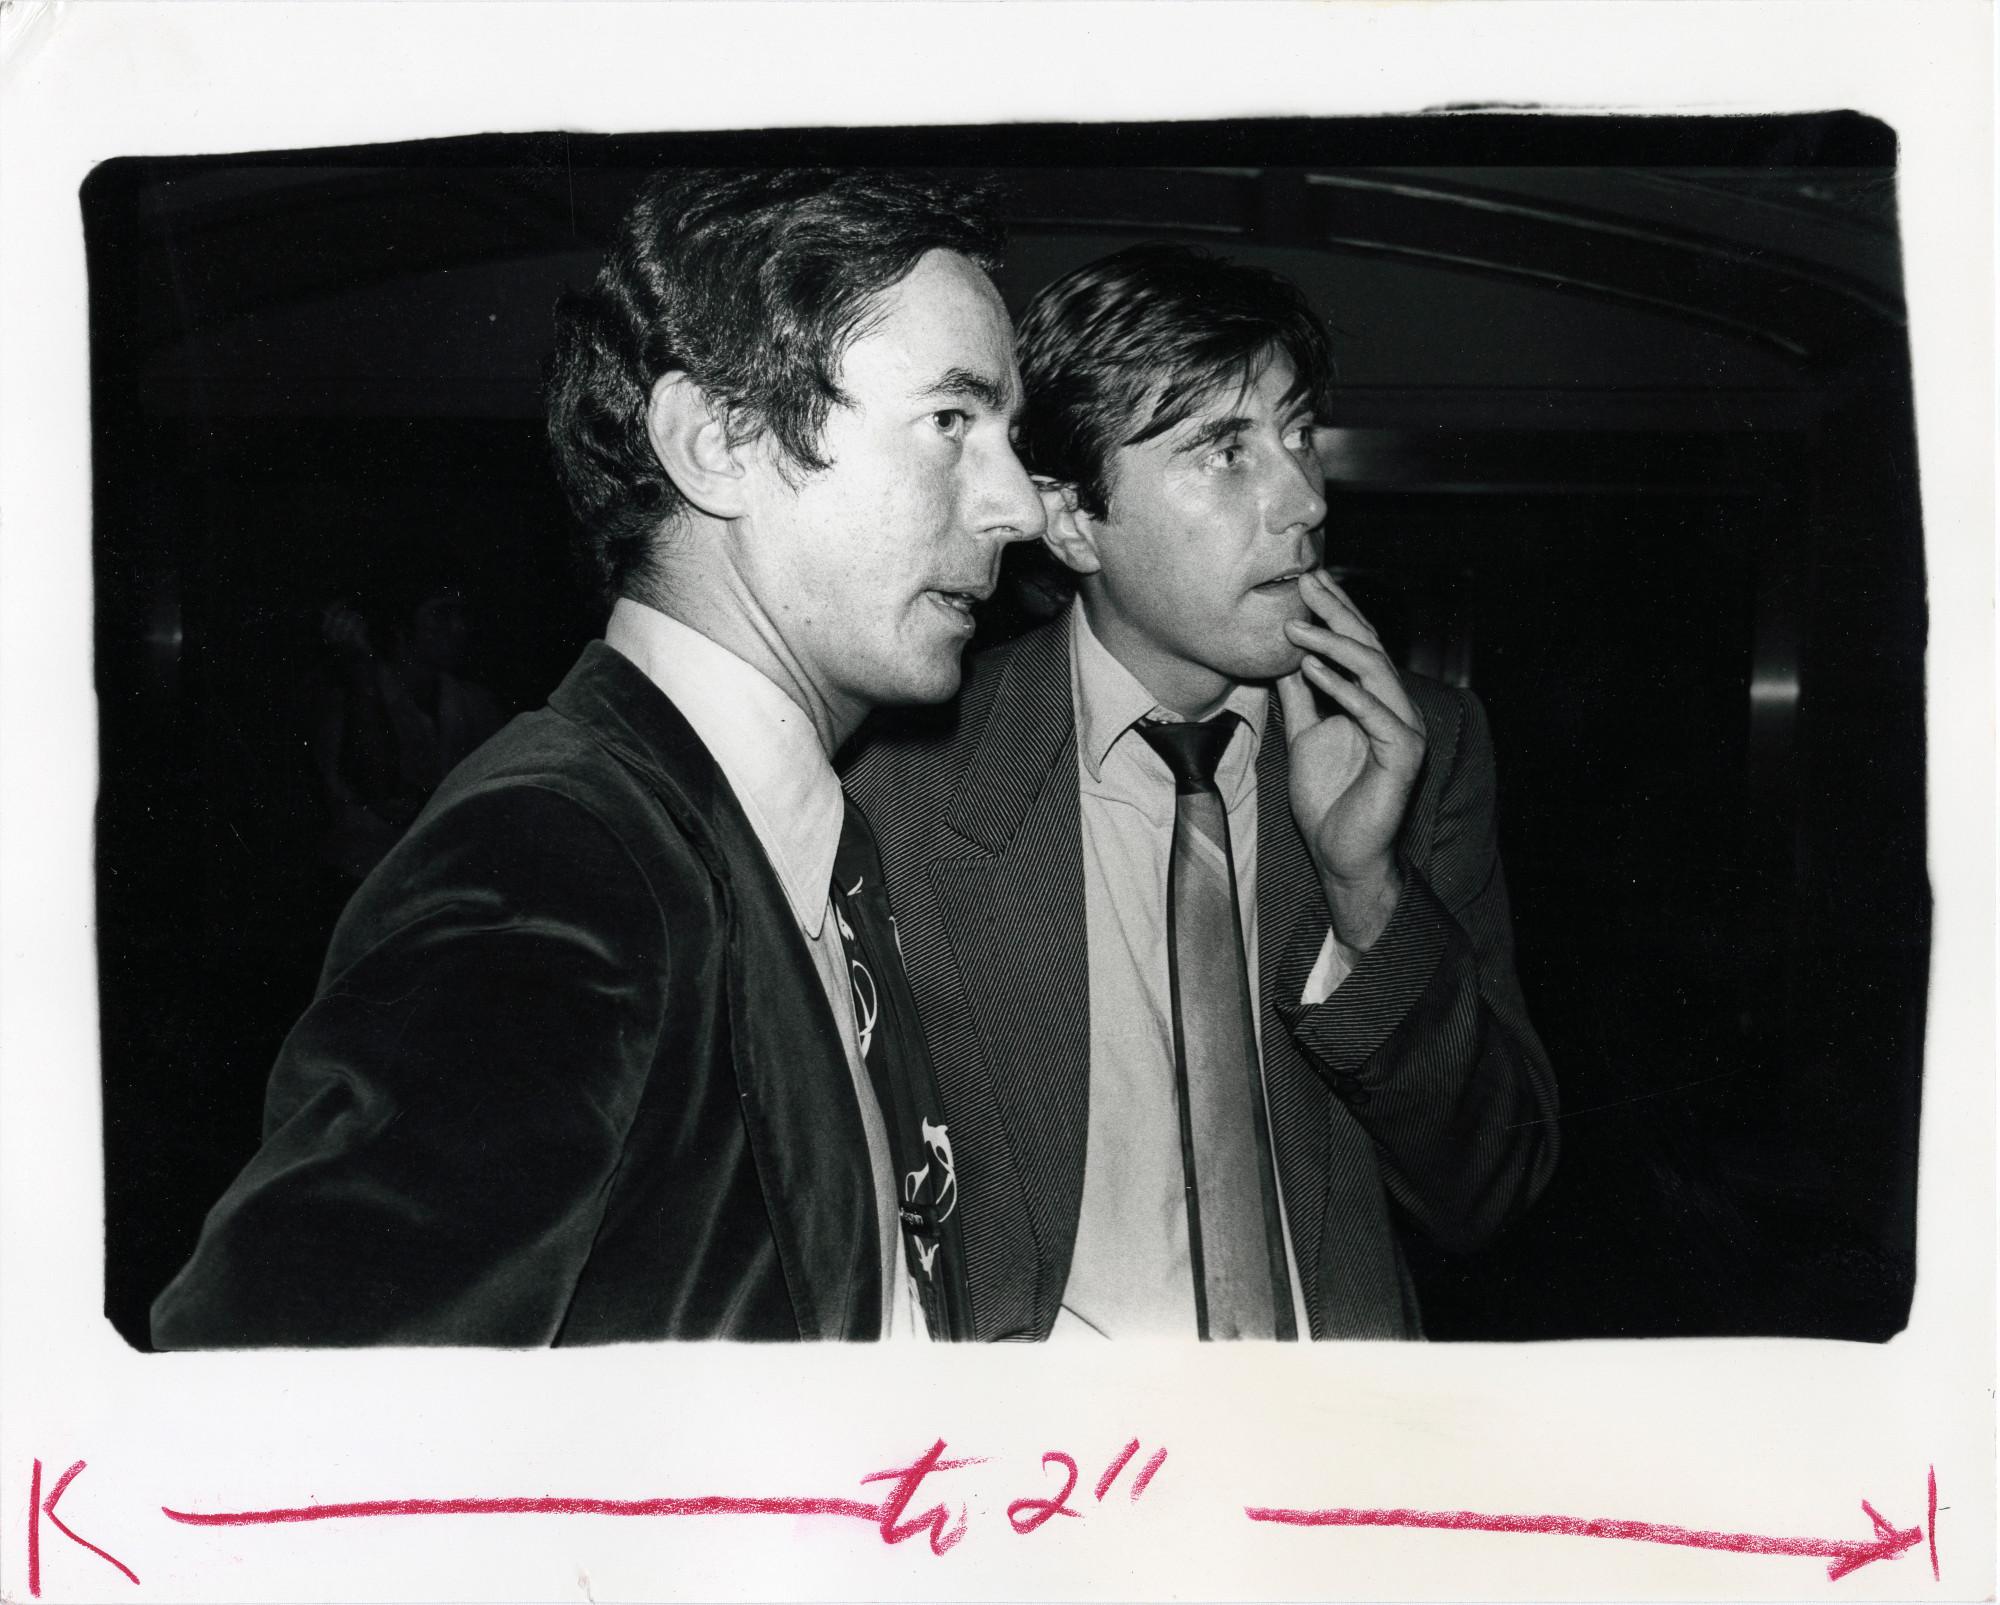 Andy Warhol Portrait Photograph – Bryan Ferry und Bob Feiden